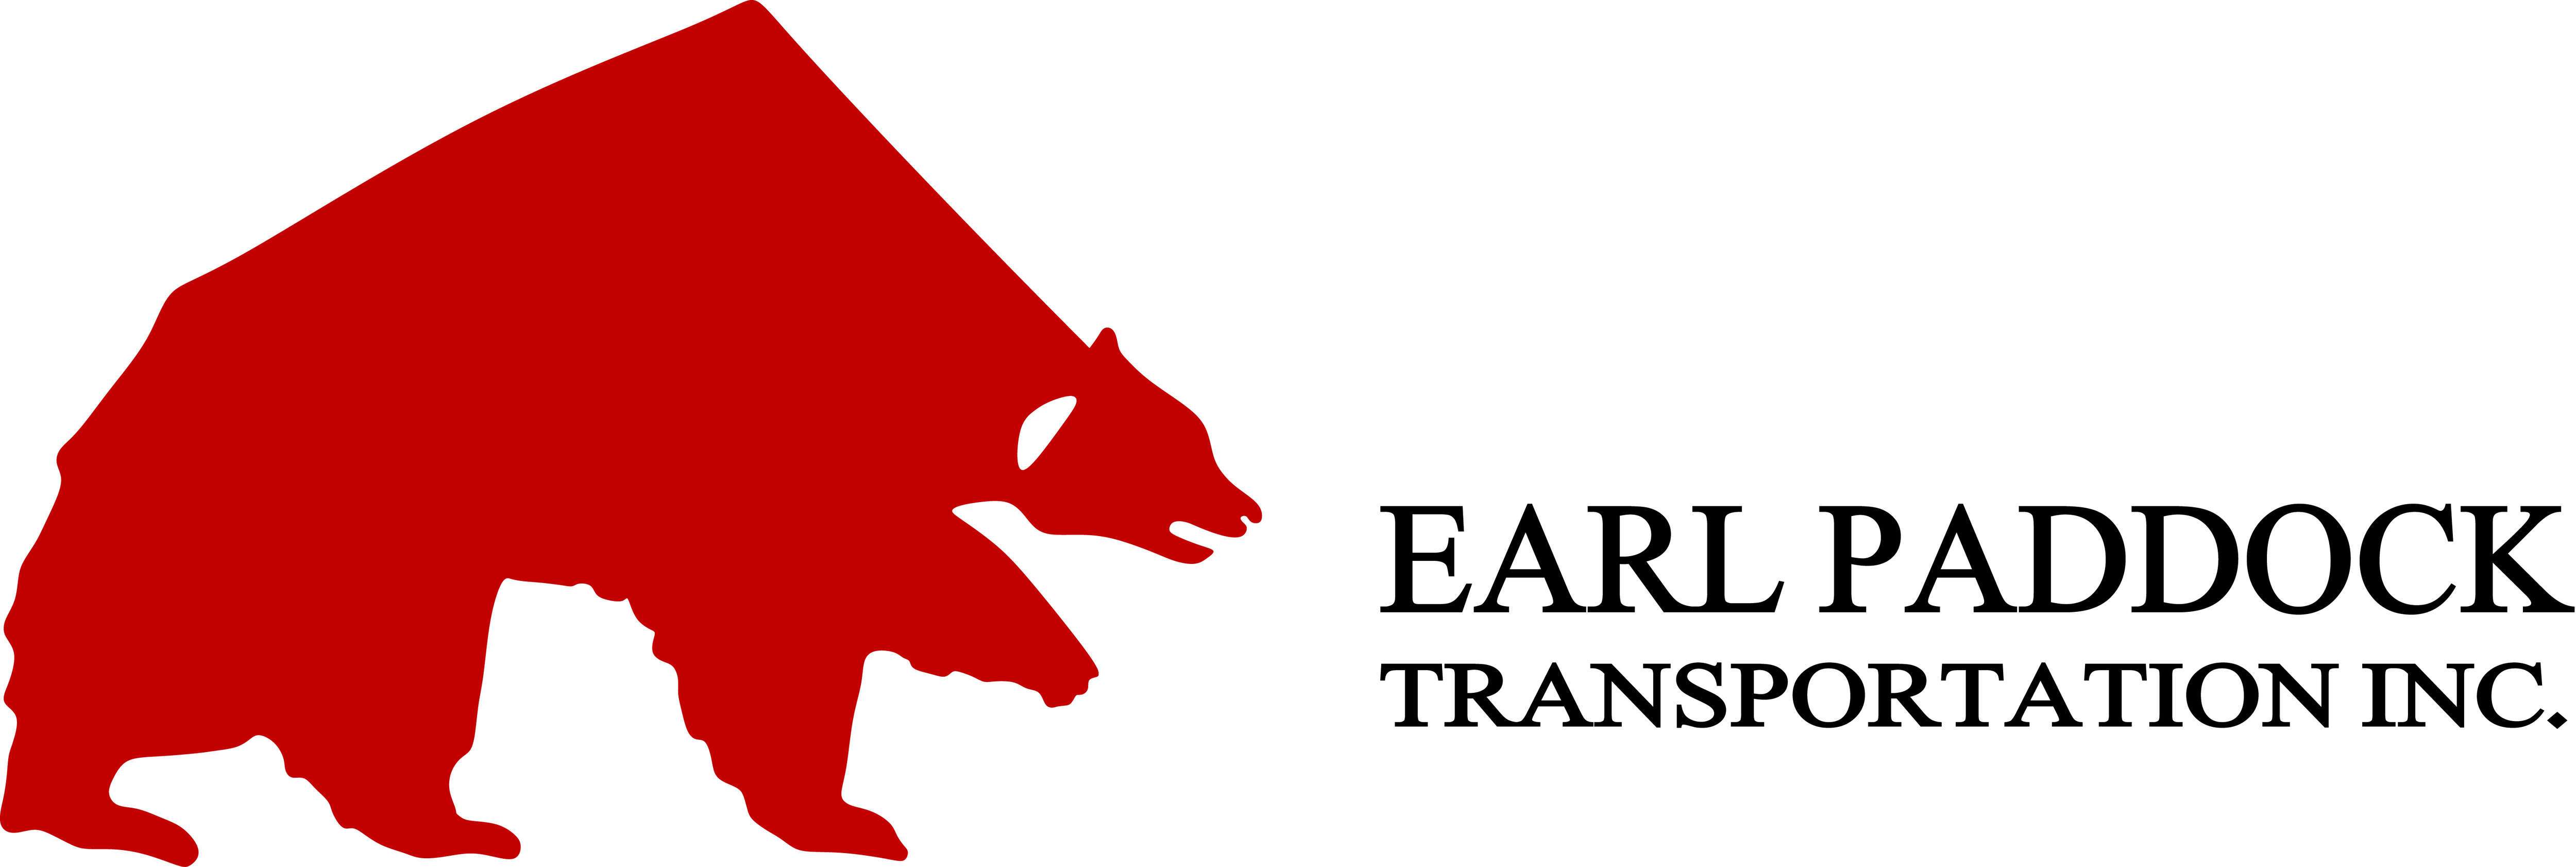 Earl Paddock Transportation Inc.